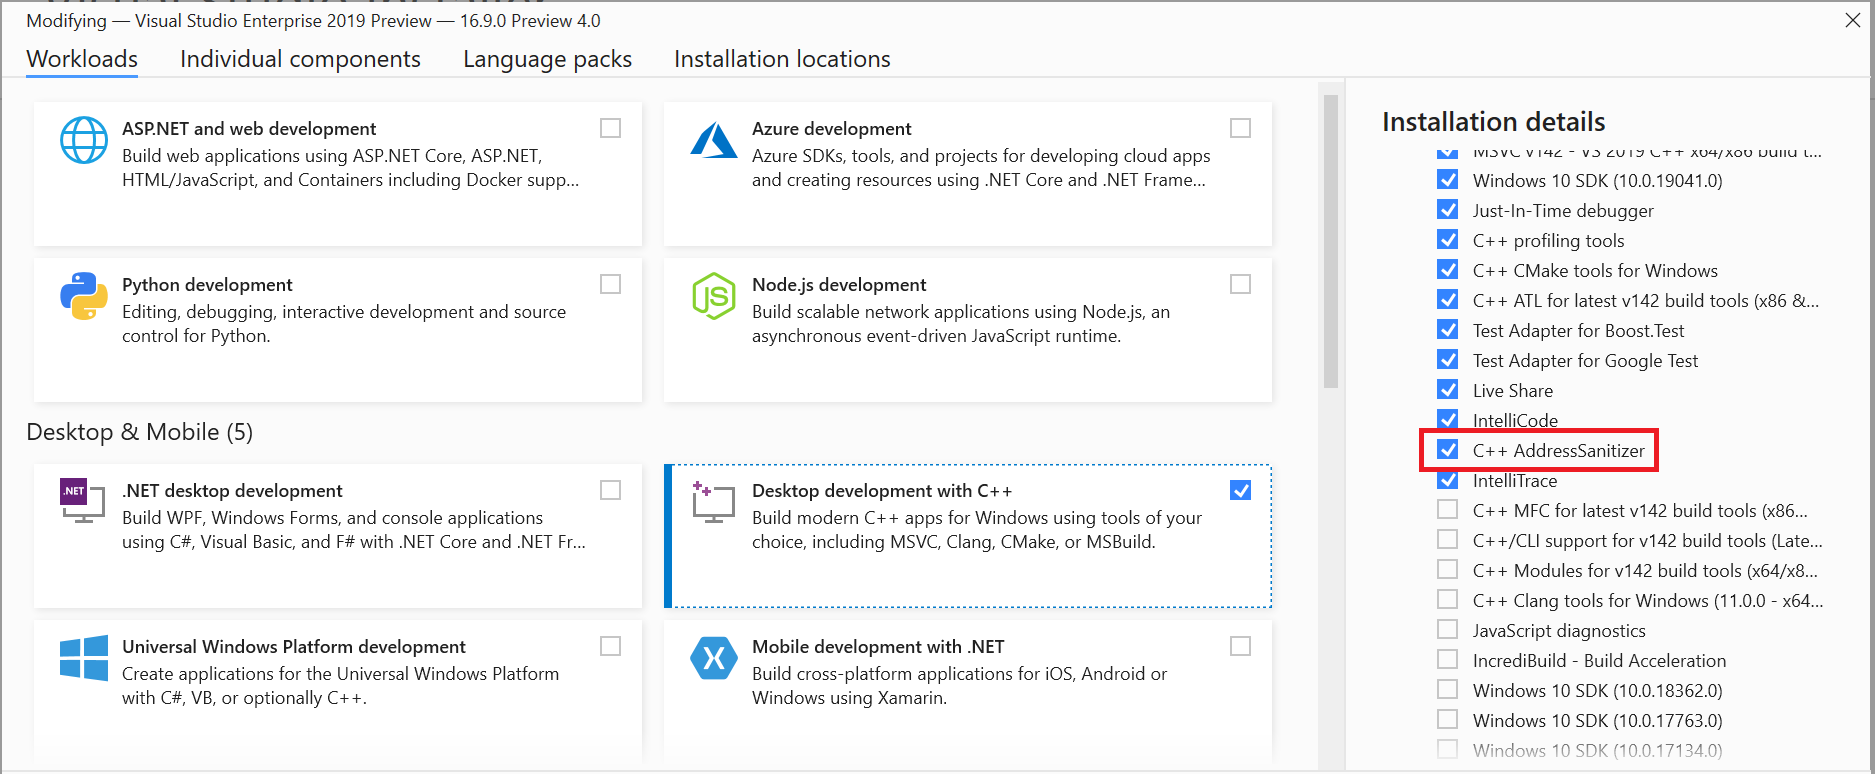 Visual Studio Installer screenshot highlighting the C++ AddressSanitizer component